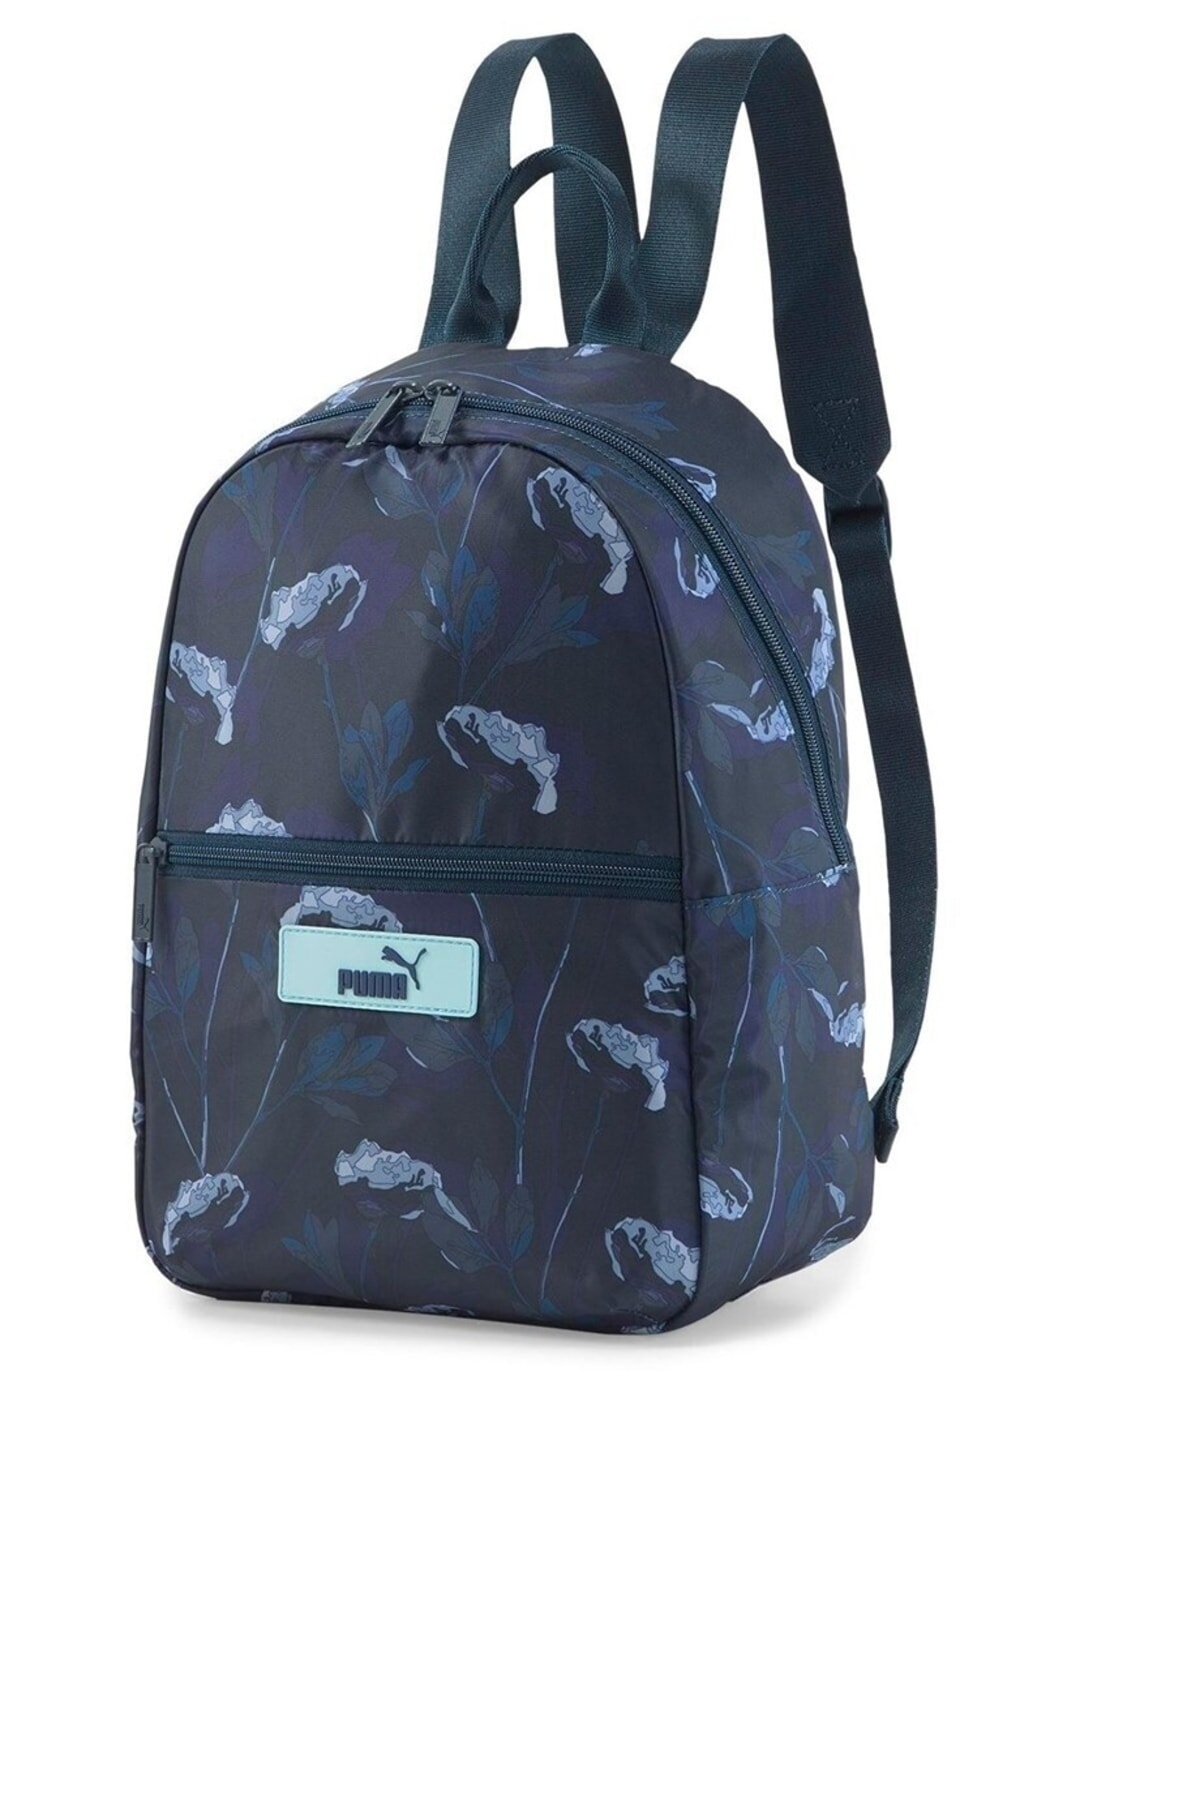 Puma Core Pop Backpack Lacivert Sırt Çantası 07914502